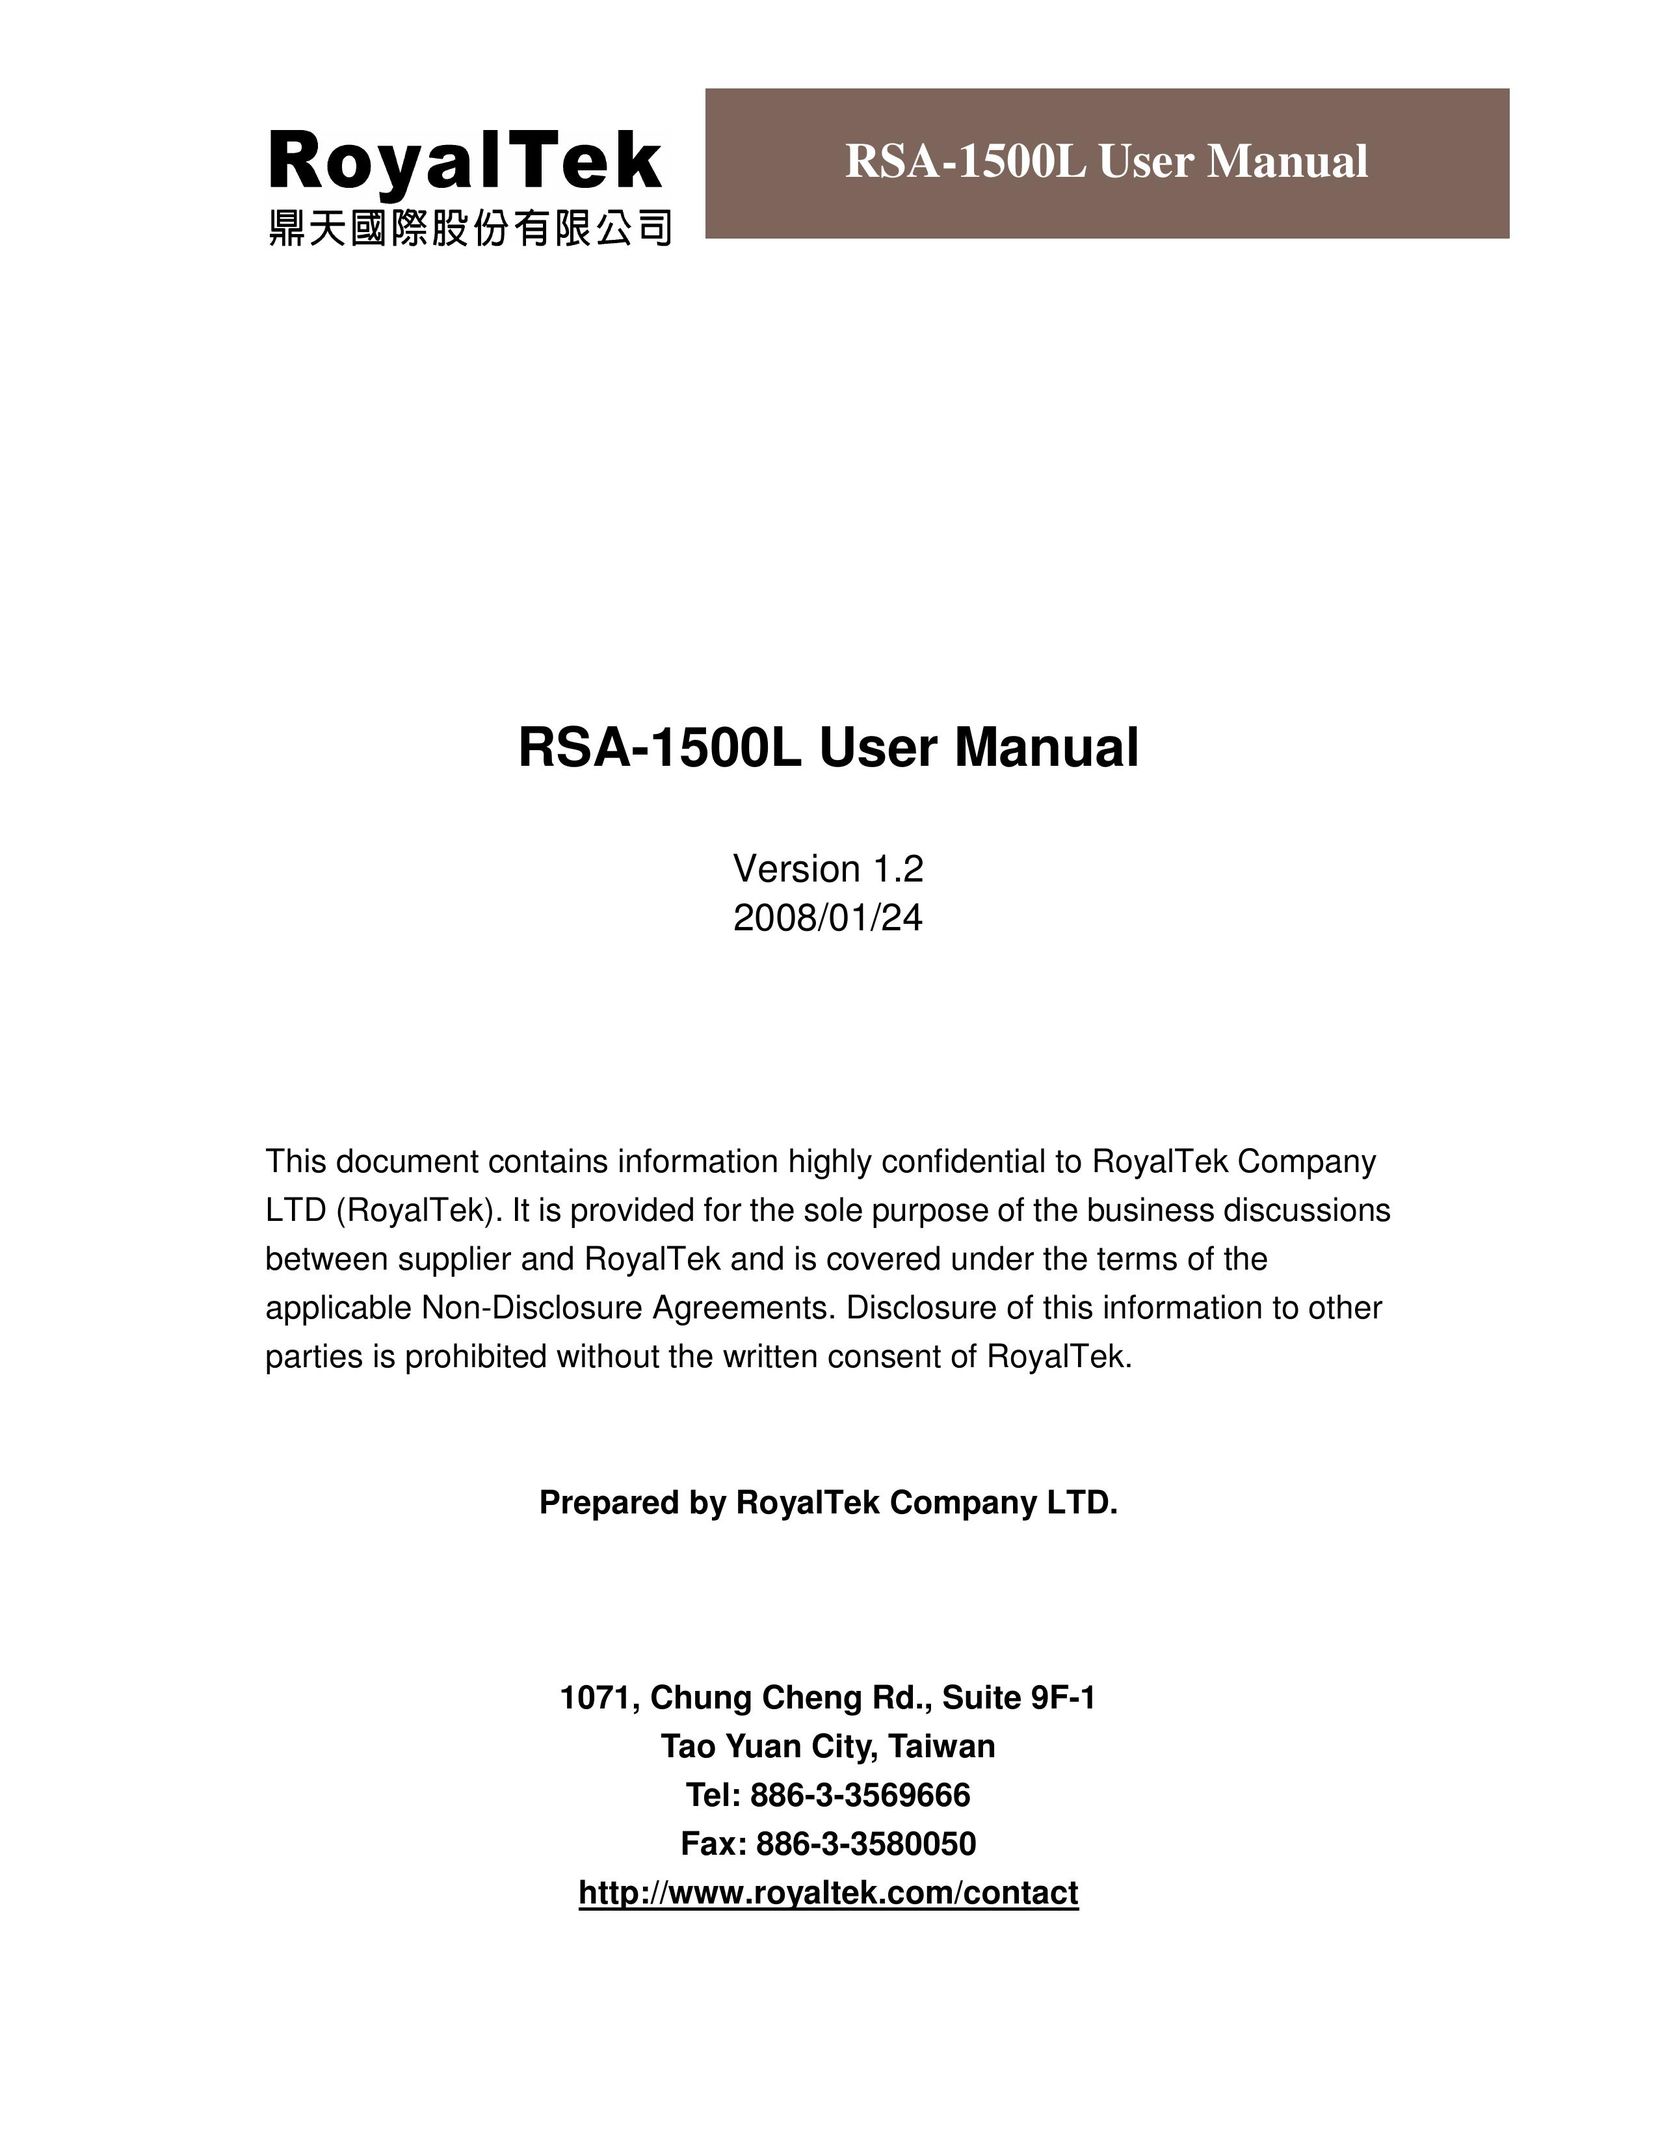 RoyalTek RSA-1500L Stereo System User Manual